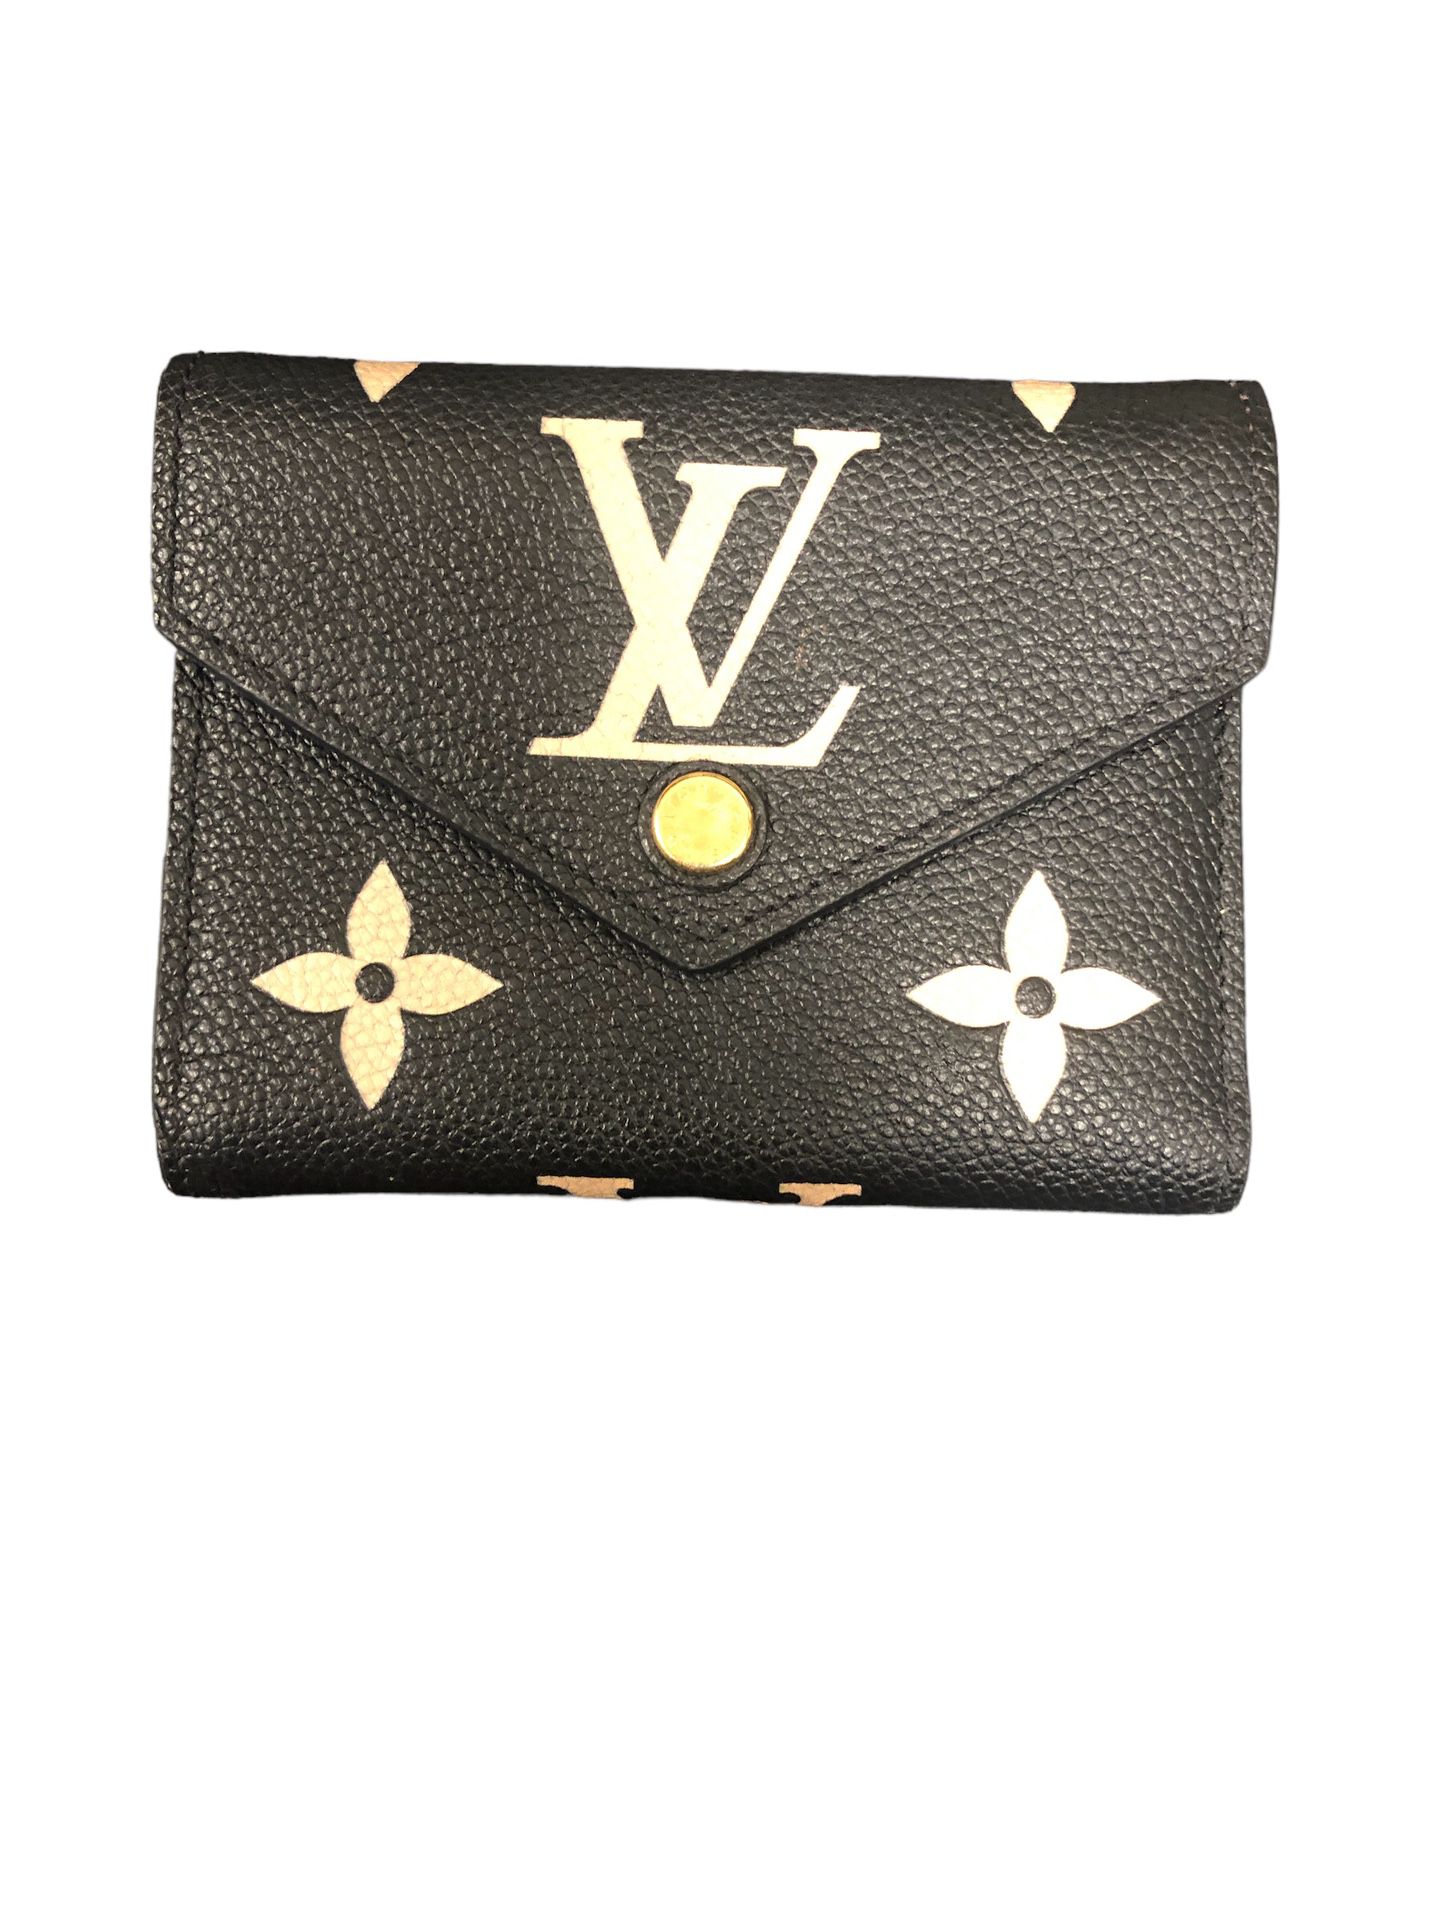 Louis Vuitton Wallet for Sale in Las Vegas, NV - OfferUp